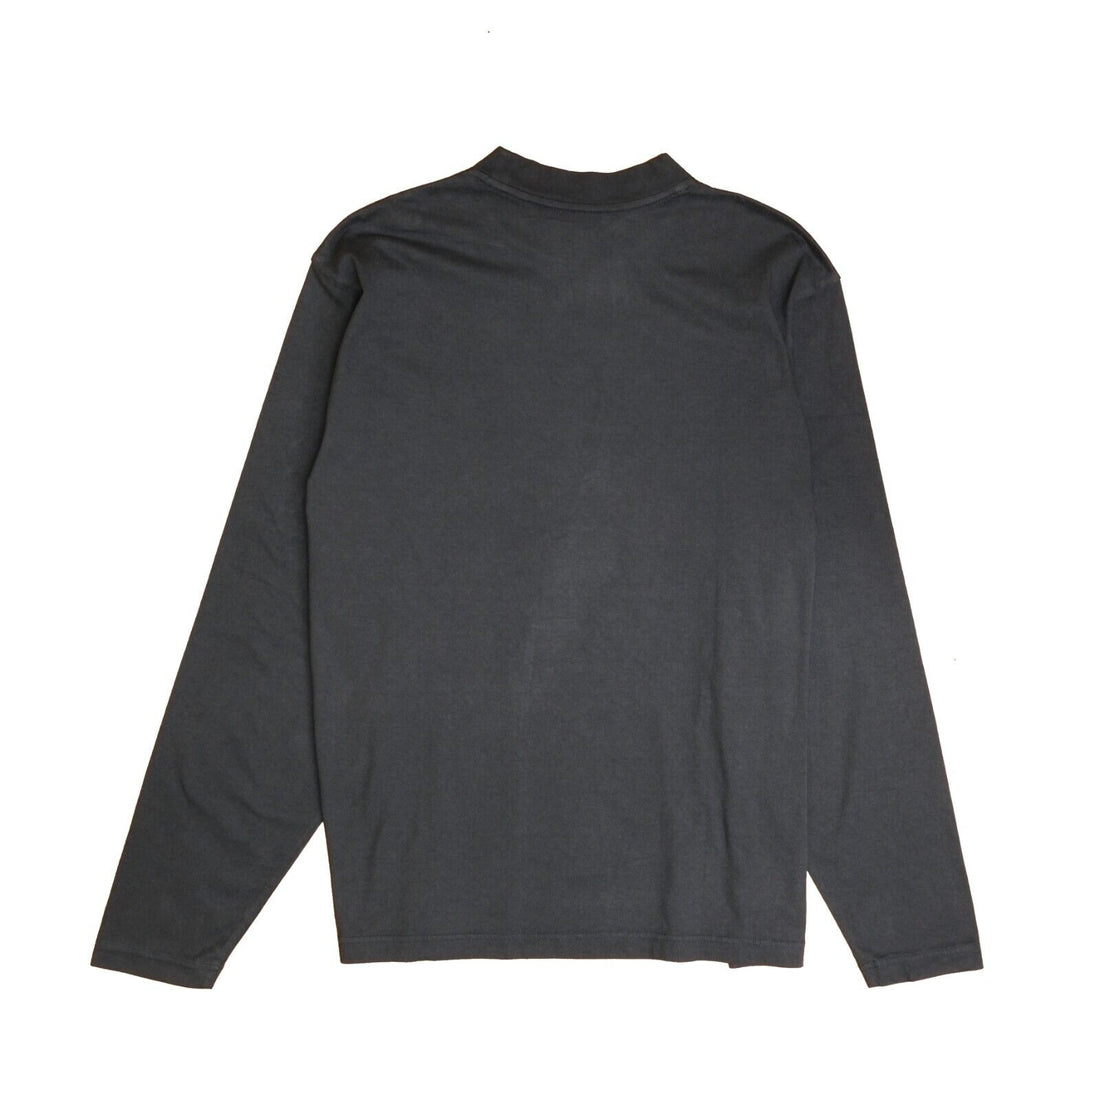 Yeezy Gap Unreleased Long Sleeve T-Shirt Size Large Black